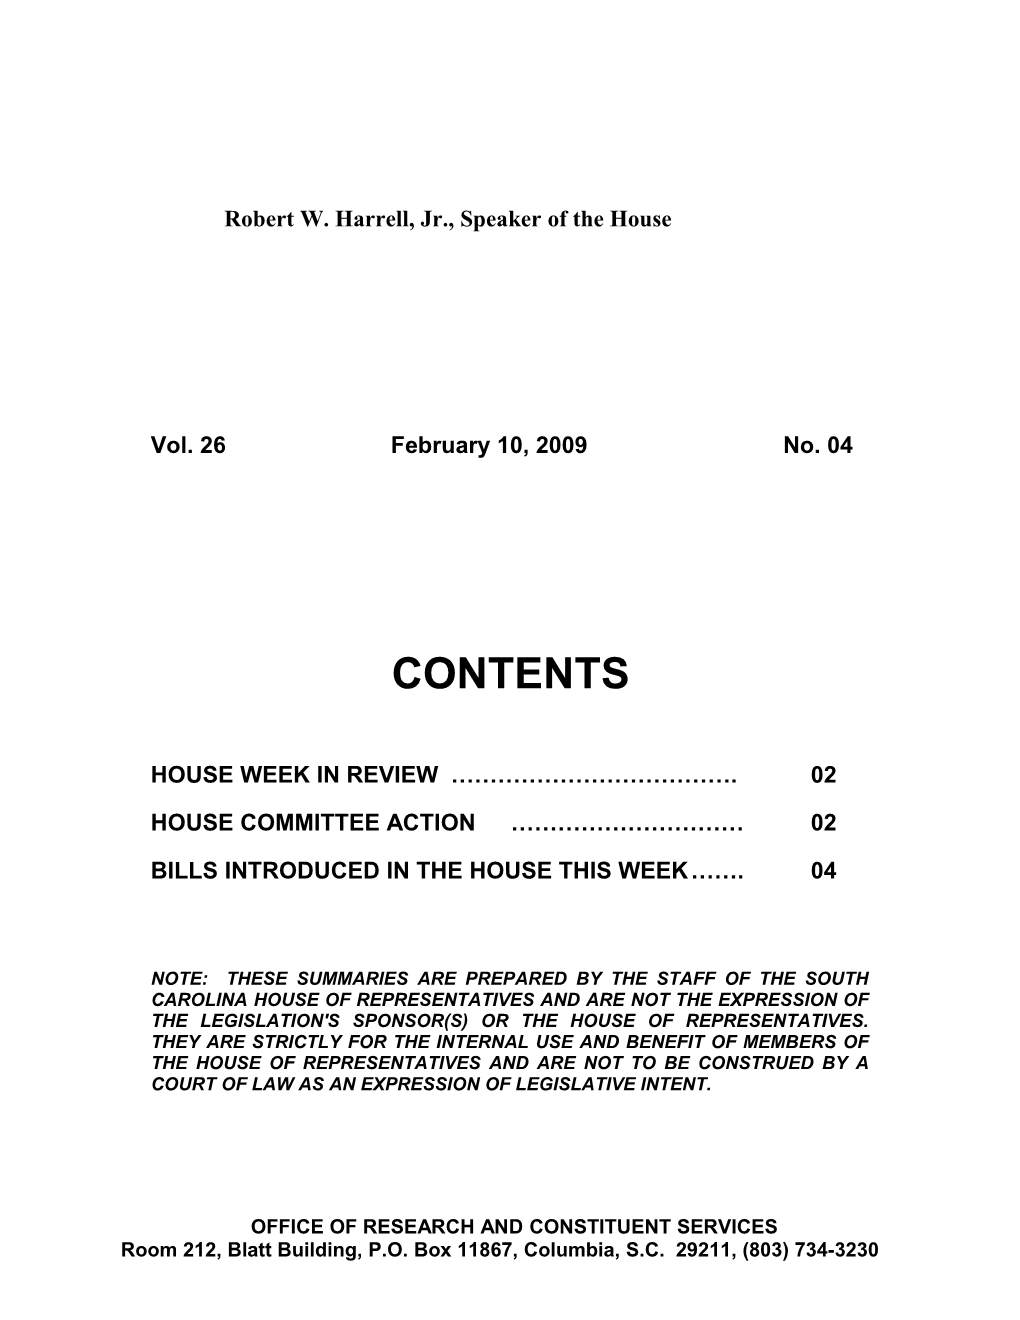 Legislative Update - Vol. 26 No. 04 February 10, 2009 - South Carolina Legislature Online